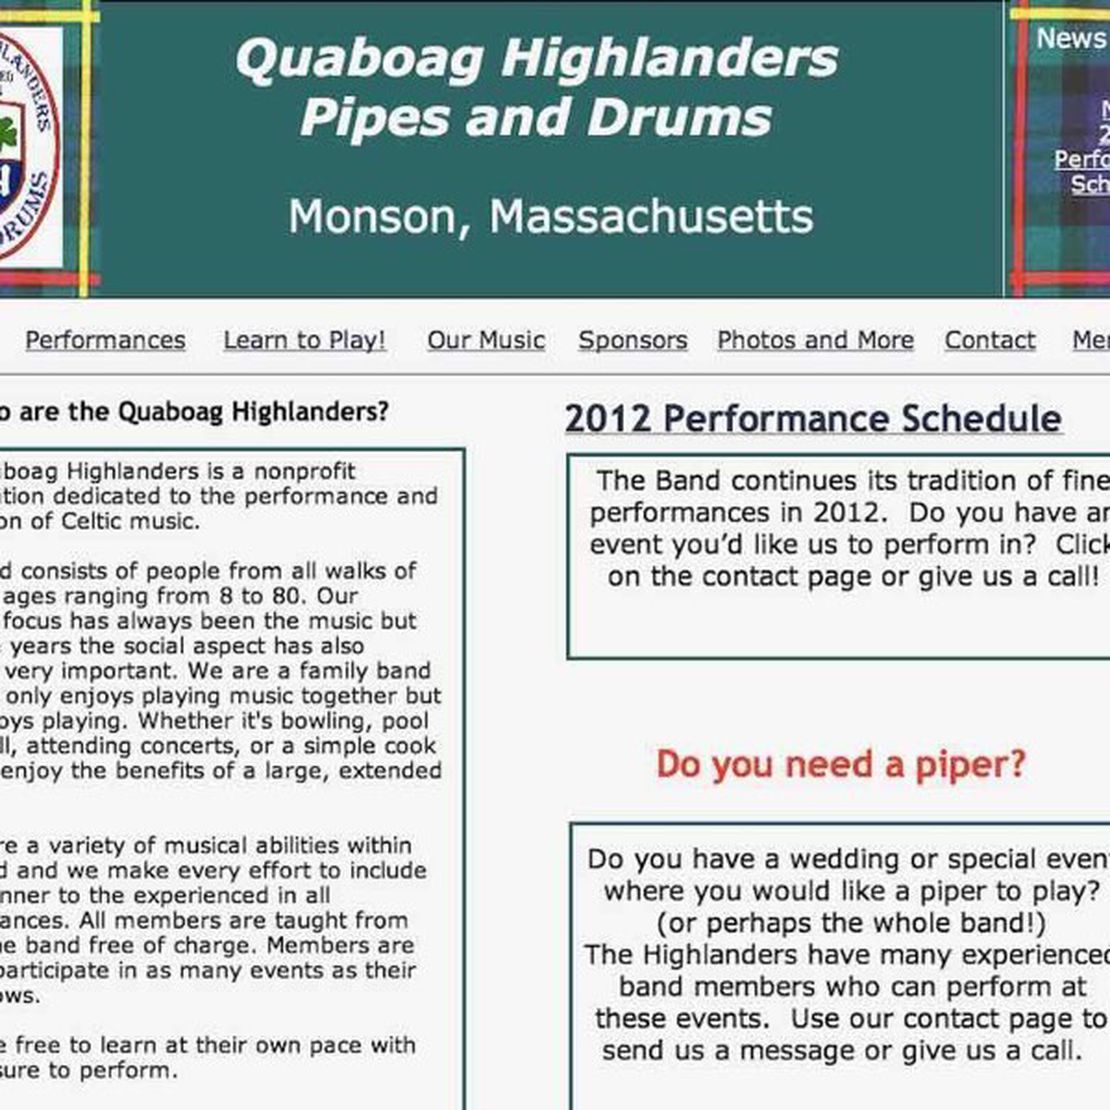 quaboag highlanders pipes and drums